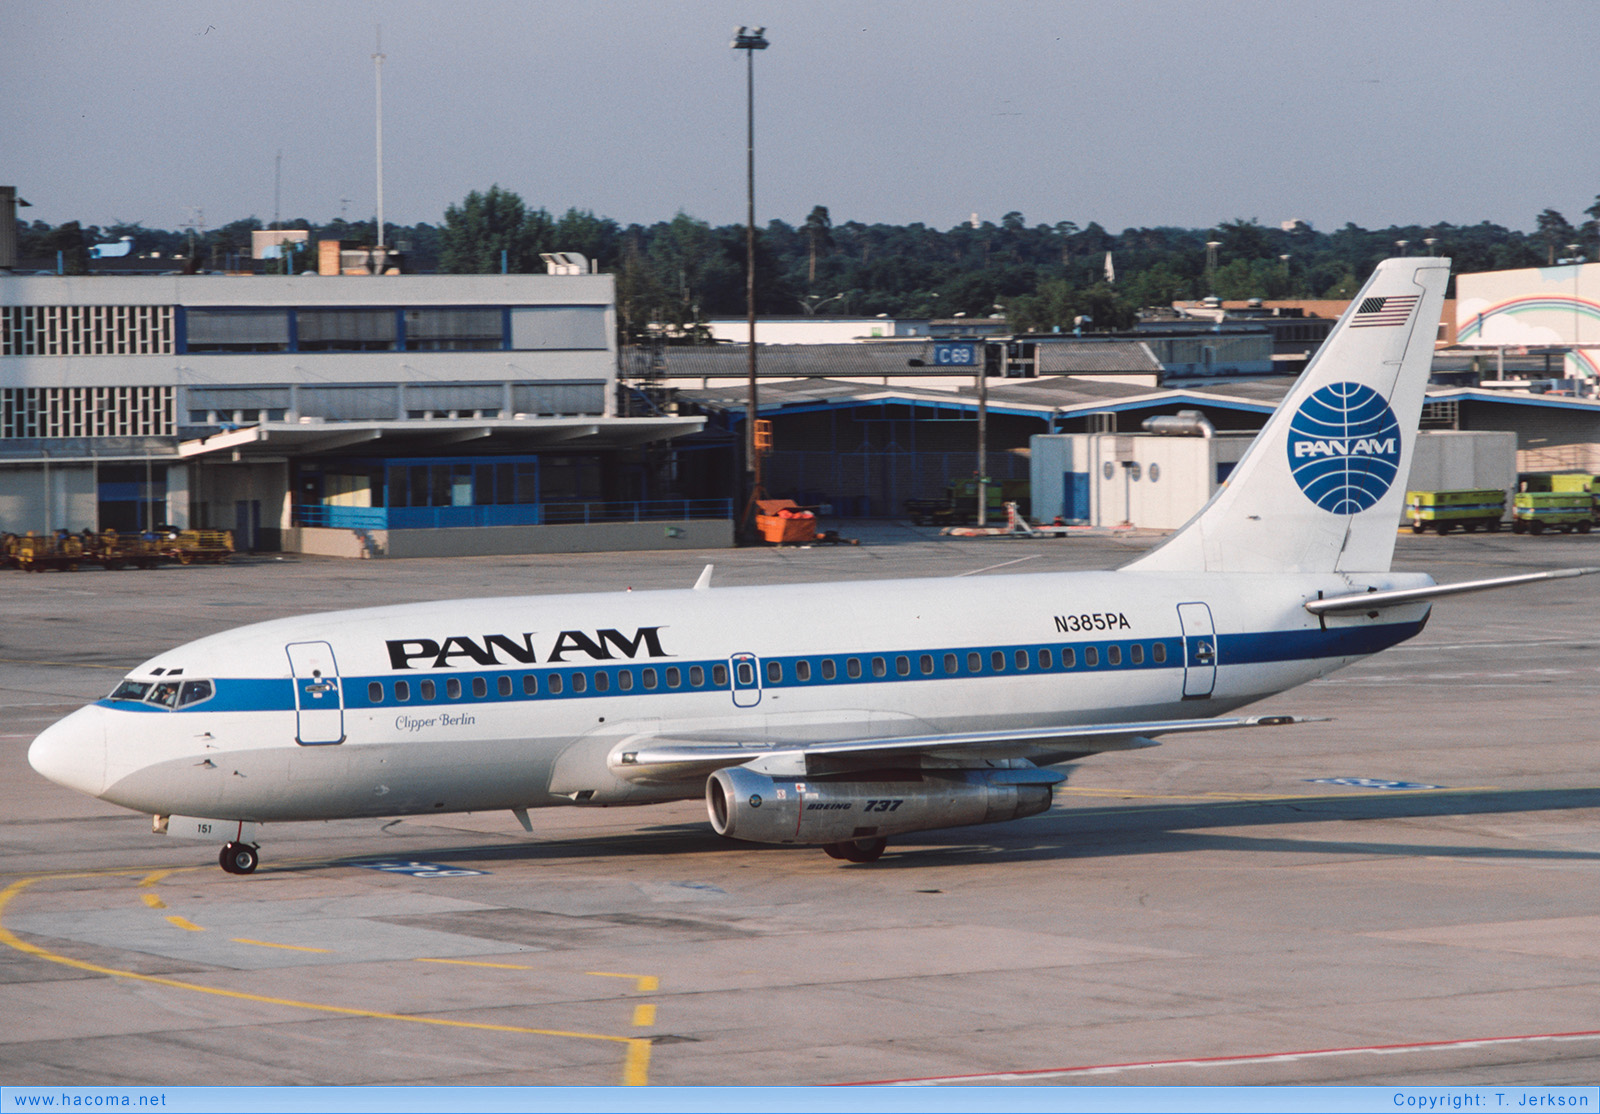 Foto von N385PA - Pan Am Clipper Berlin - Flughafen Frankfurt am Main - 1985